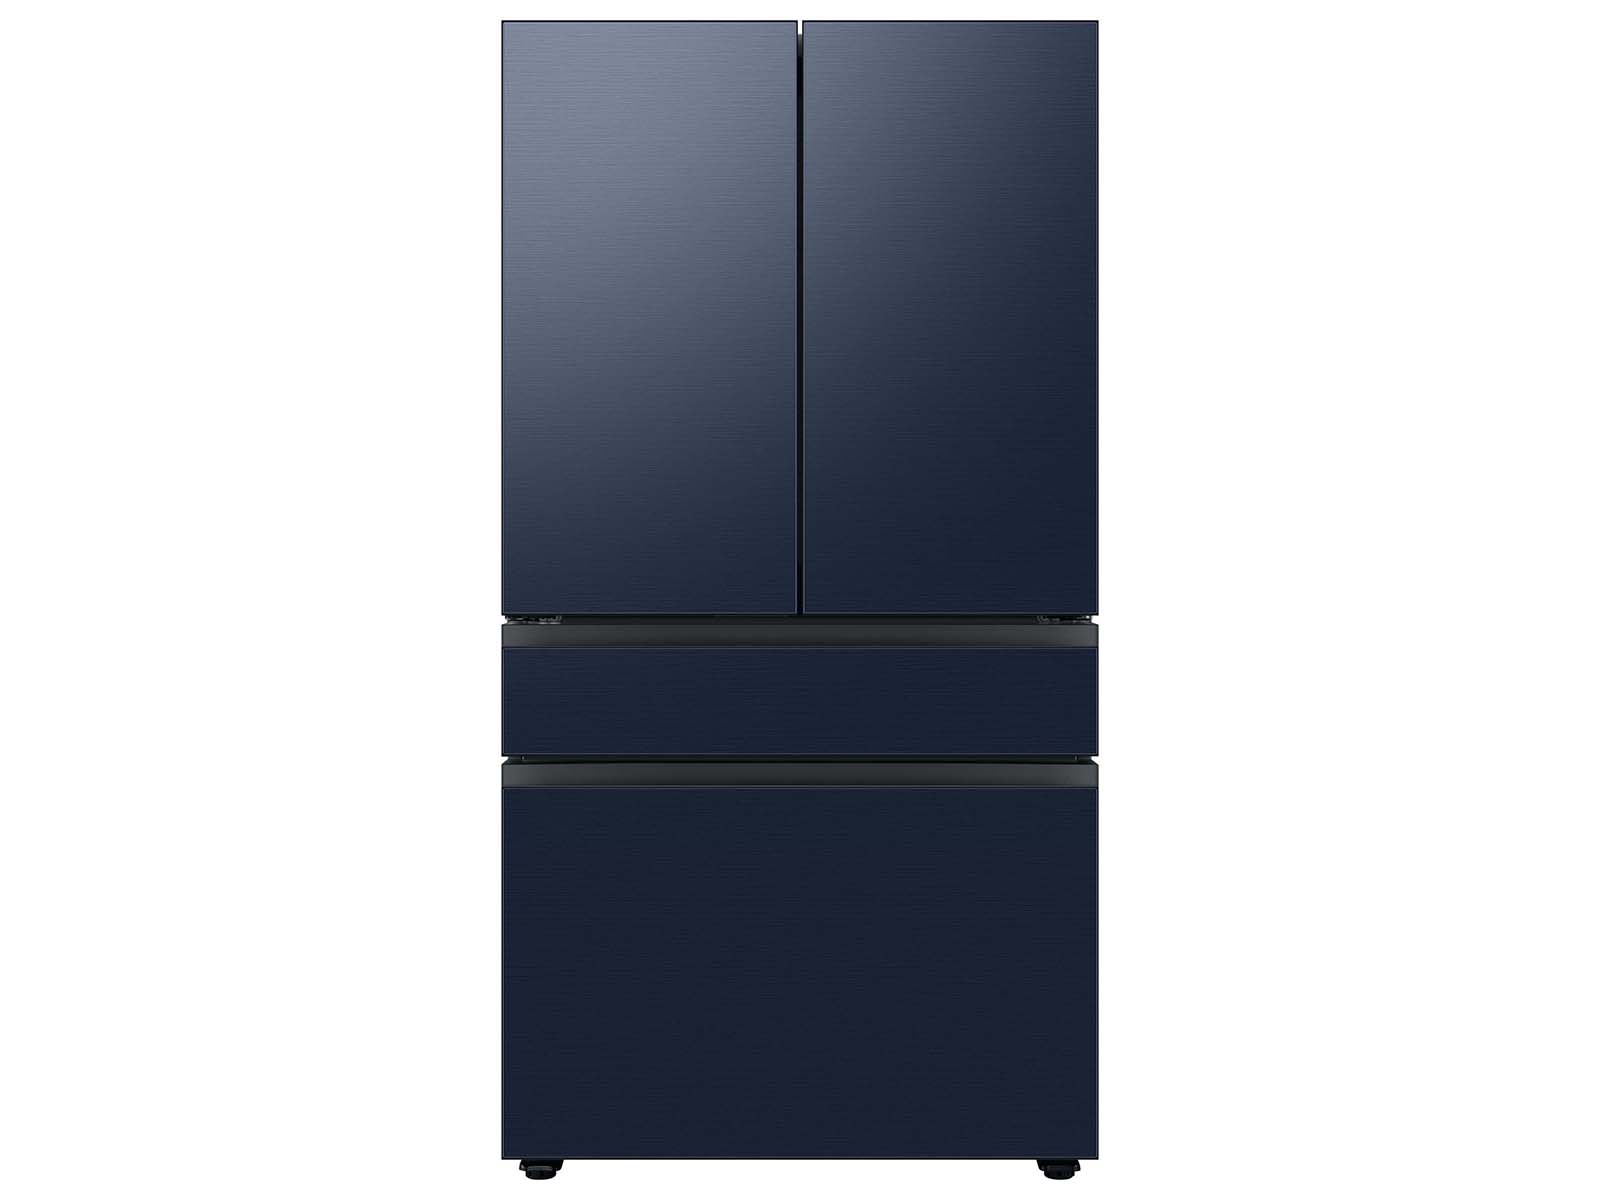 Bespoke 4-Door French Door Refrigerator (23 cu. ft.) with Customizable Door Panel Colors and Beverage Center&trade; in Navy Steel with Stainless Steel Middle Panel